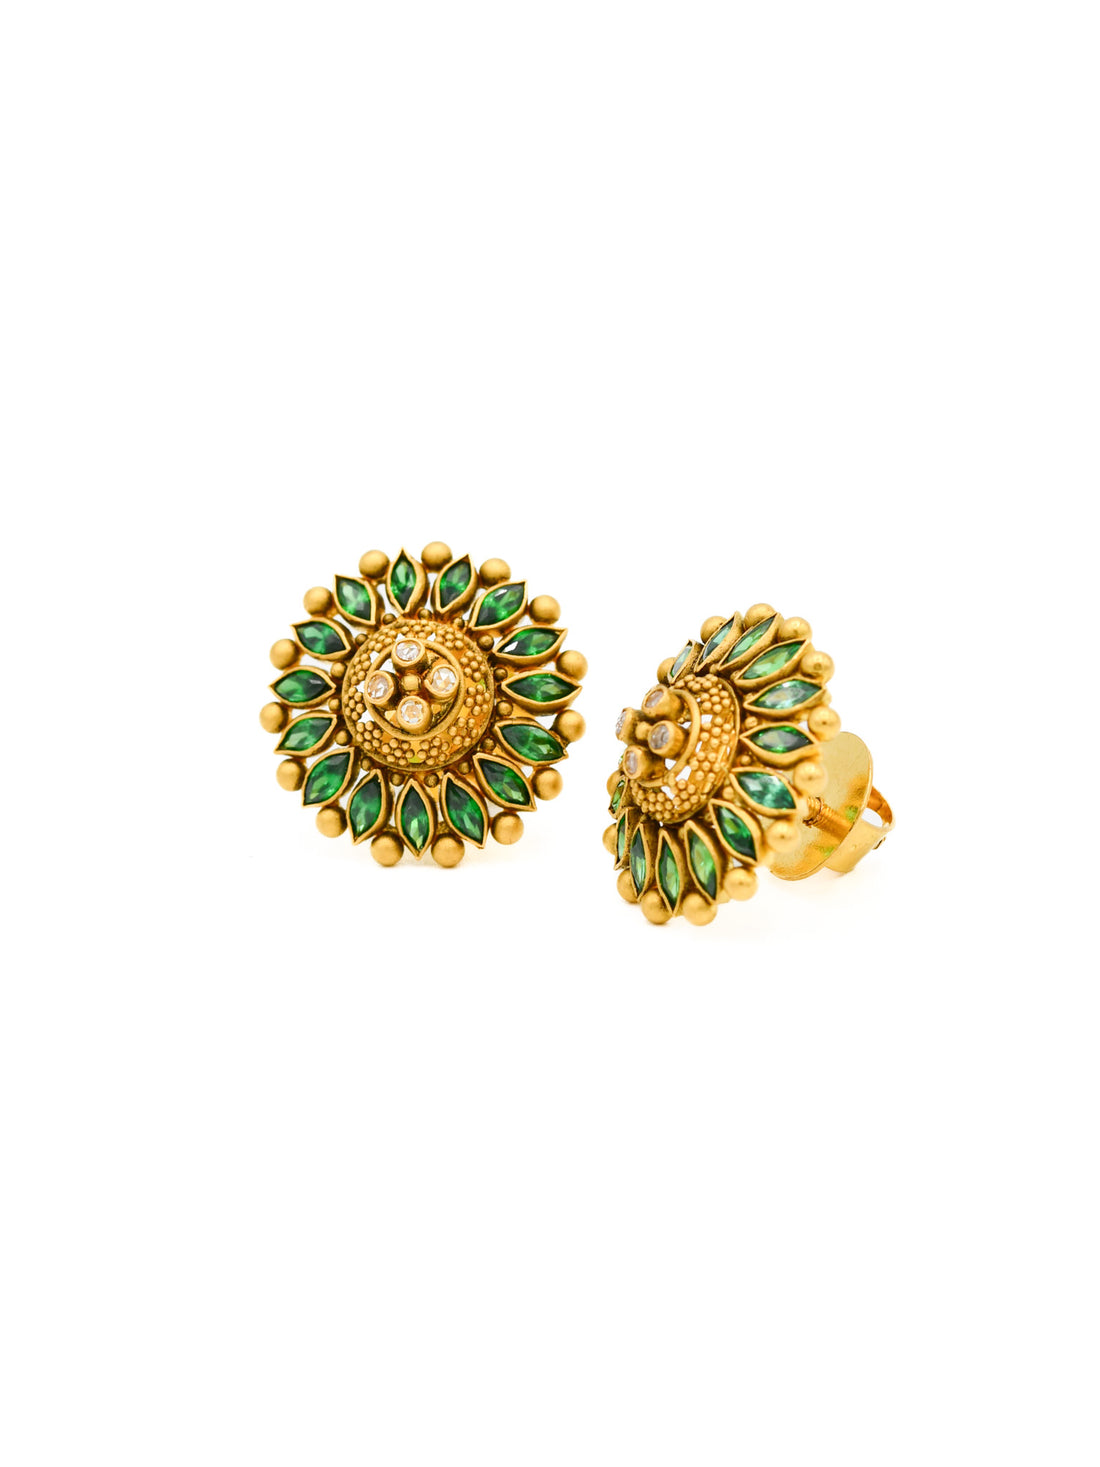 22ct Gold Green CZ Antique Stud Earrings - Roop Darshan